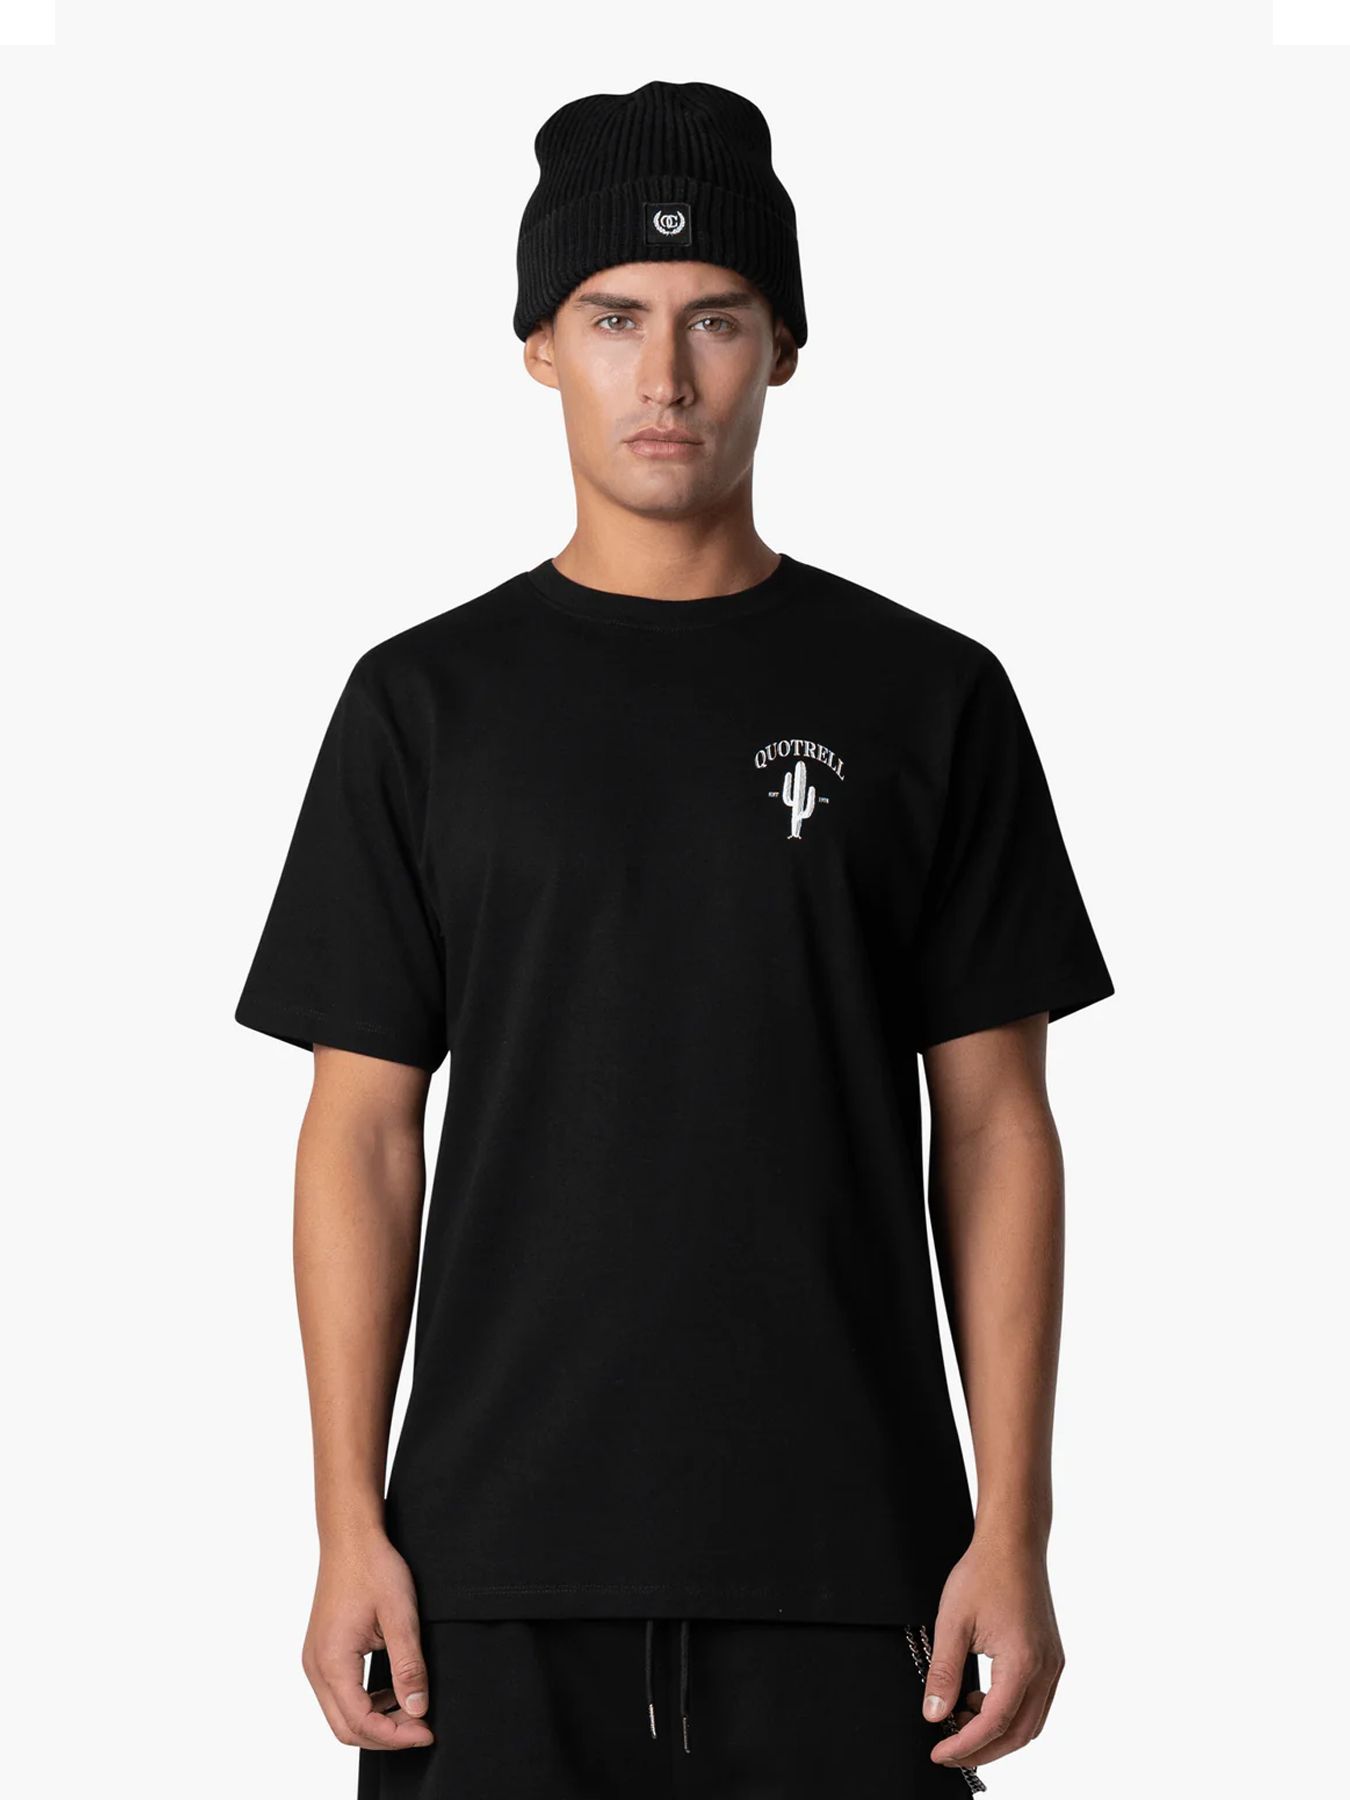 Quotrell Cactus T-shirt Black/White 2900147482074